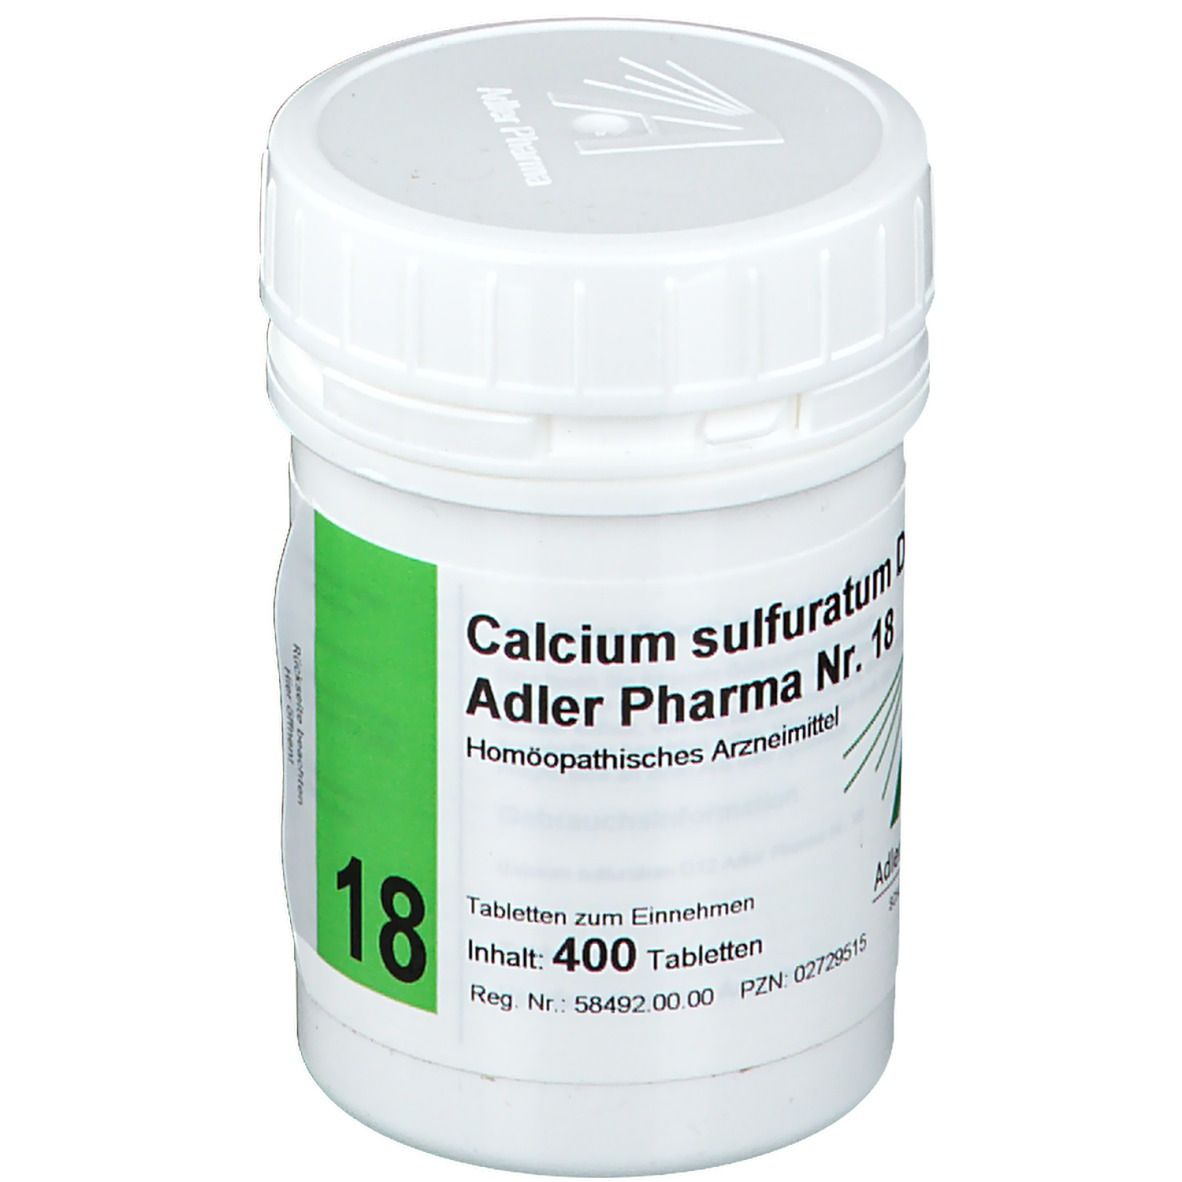 Adler Pharma Calcium sulfuratum D12 Biochemie nach Dr. Schüßler Nr. 18